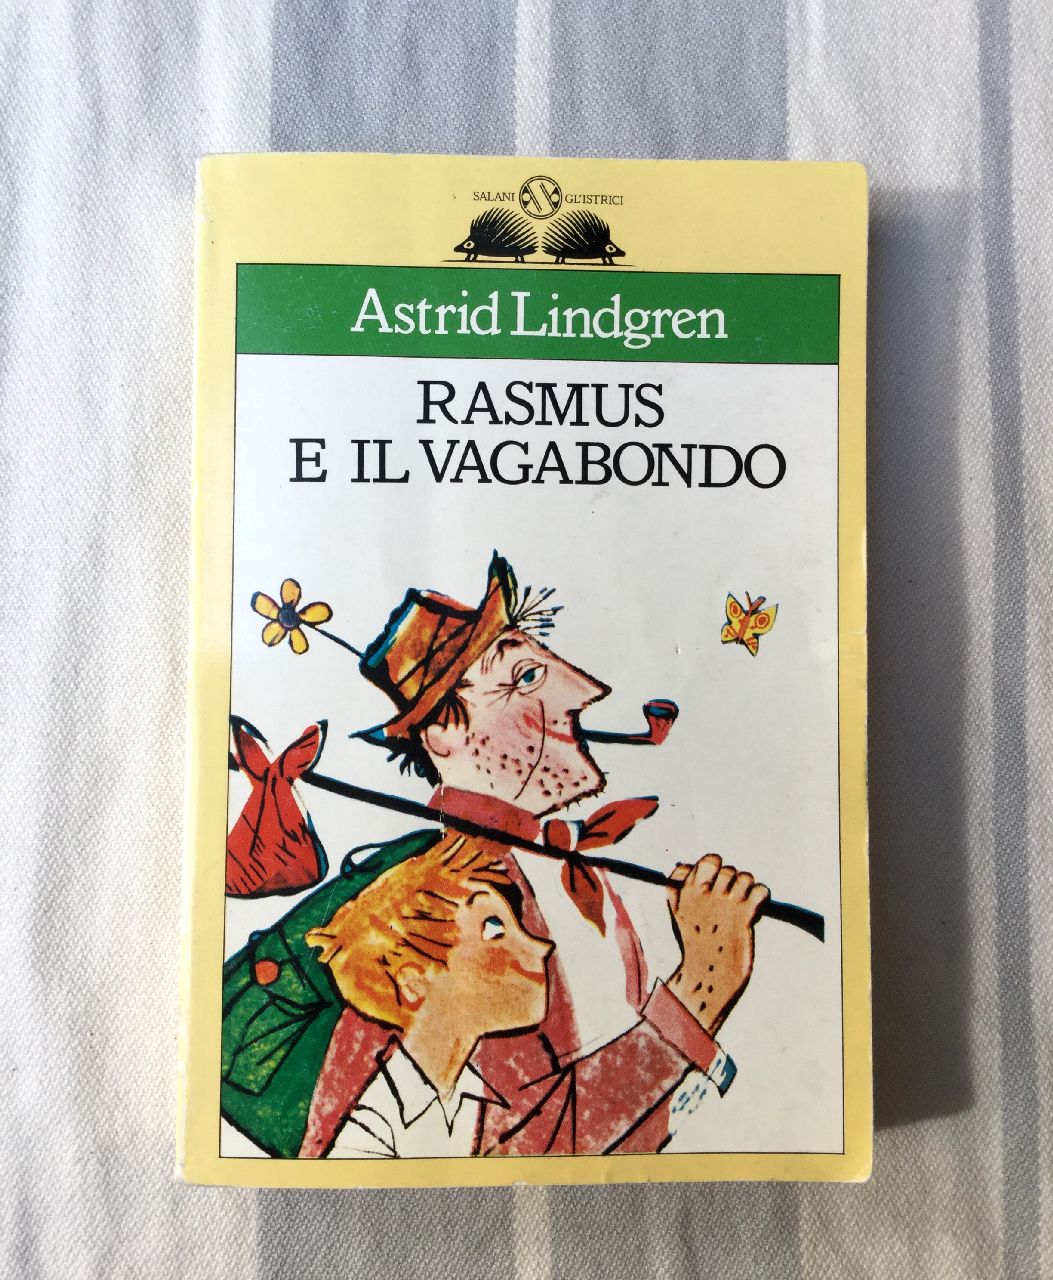 Astrid Lindgren, Rasmus e il vagabondo, Salani